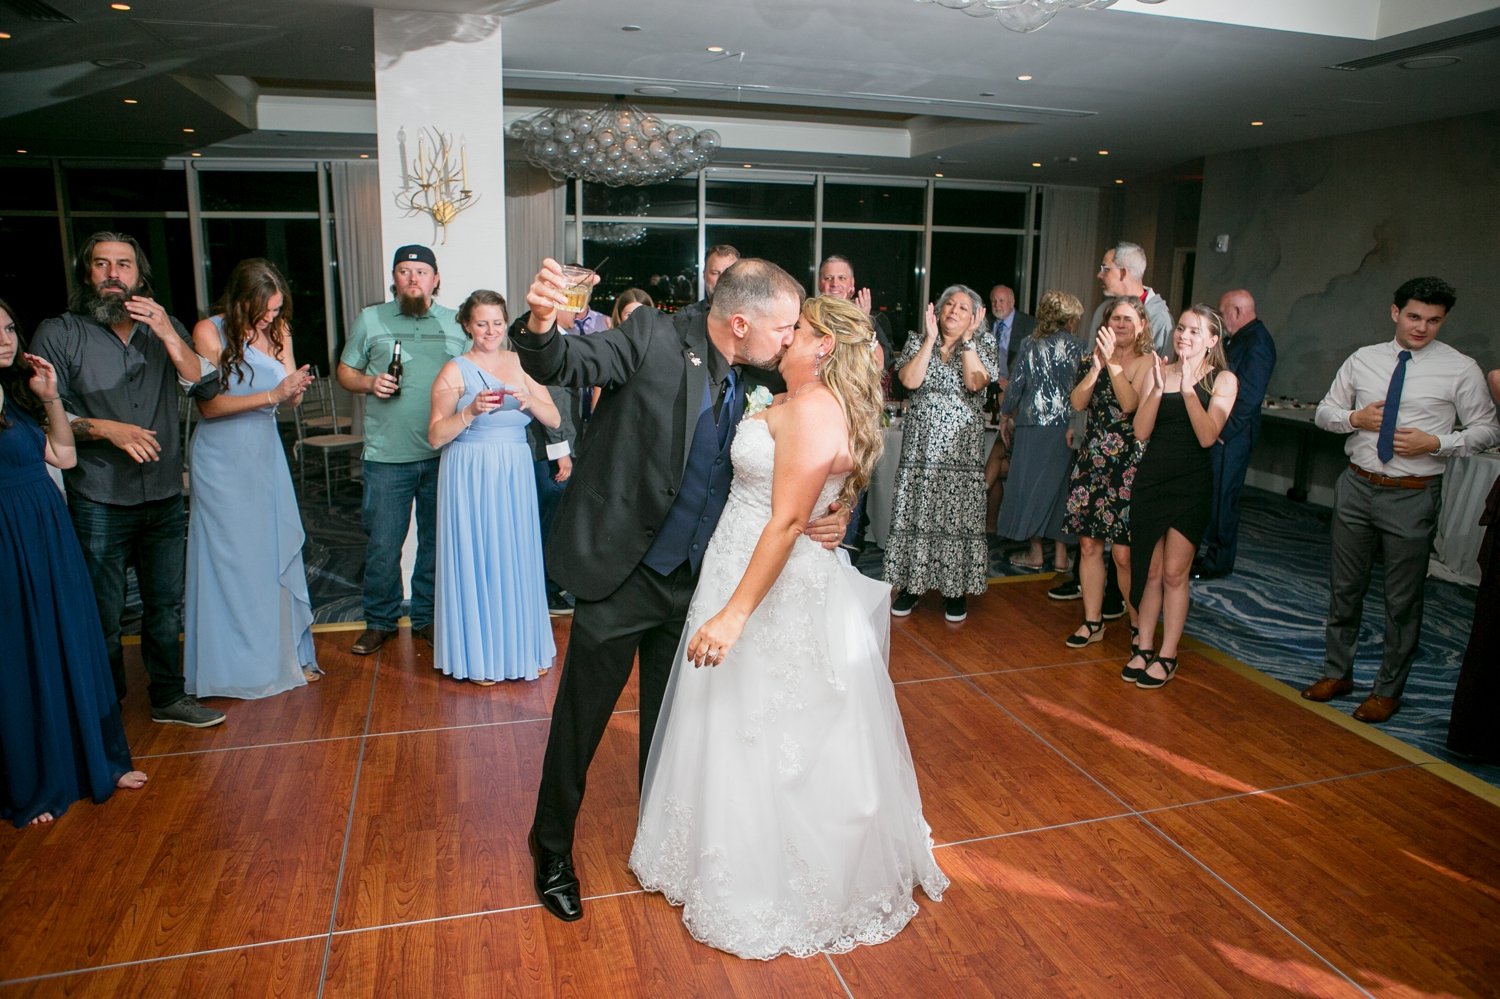 Last Dance by bride and groom in Skylark ballroom at Grand hyatt Tampa Bay